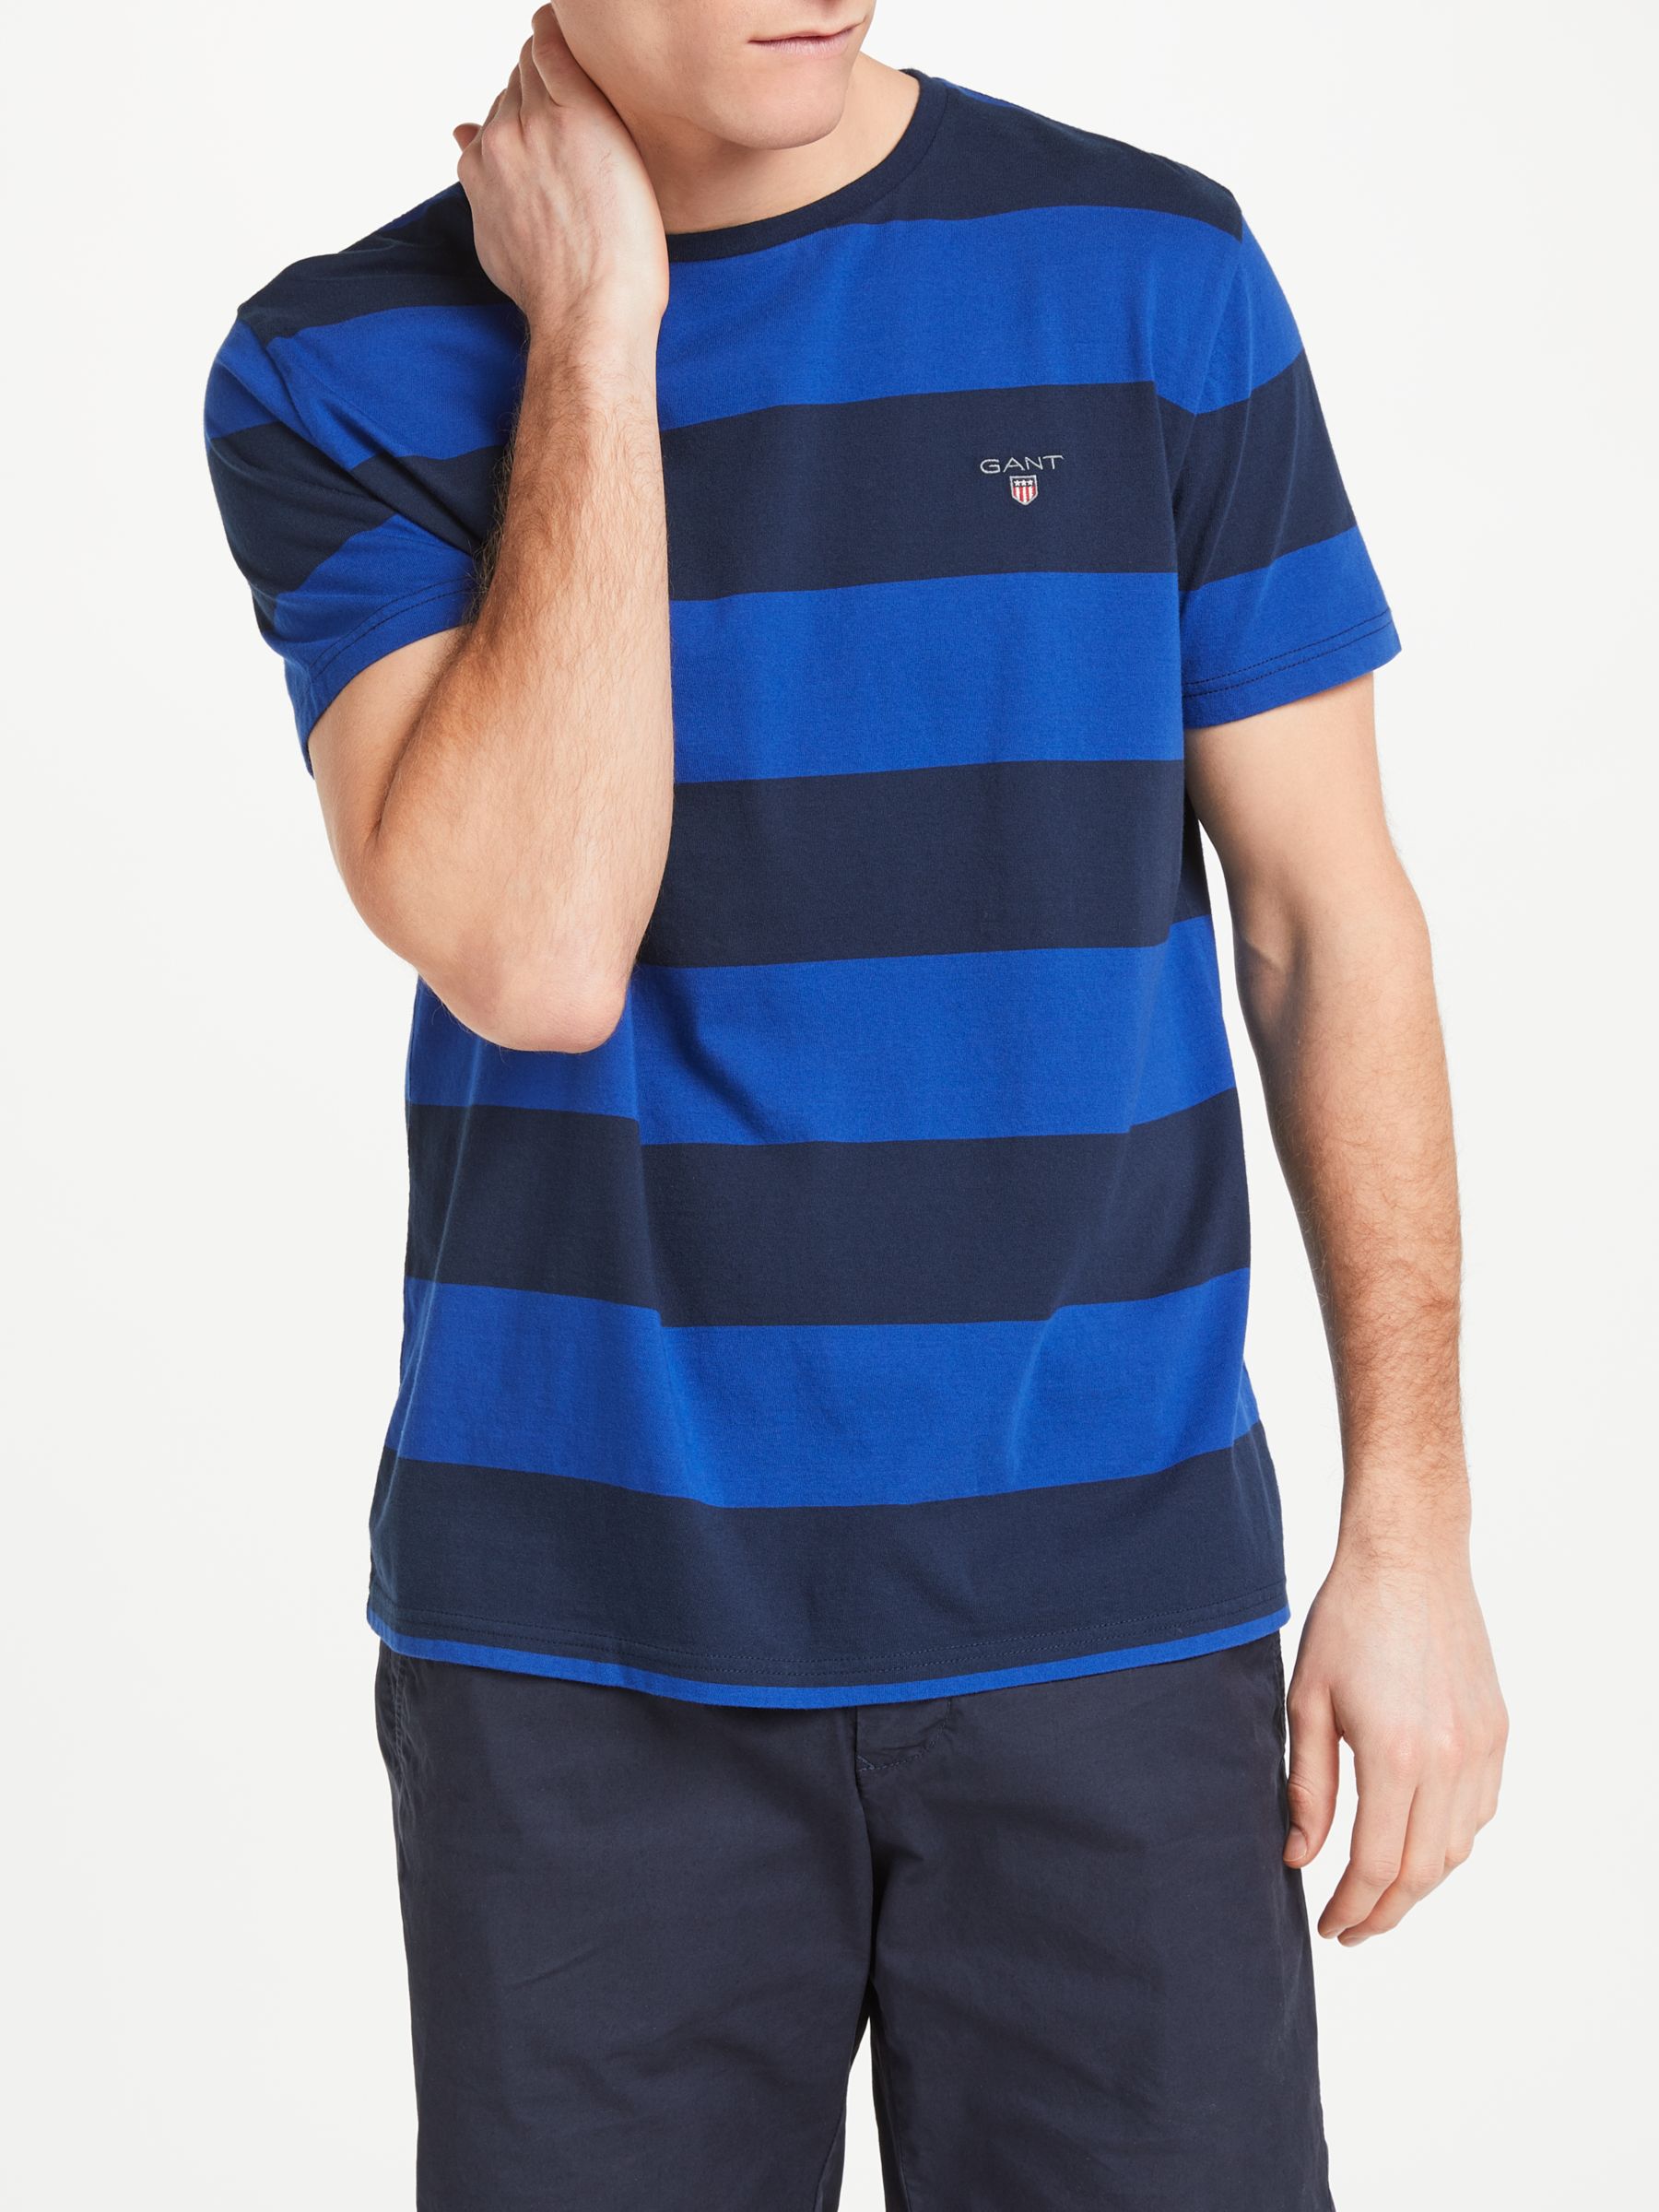 GANT Original Barstripe Cotton T-Shirt, Blue, XL